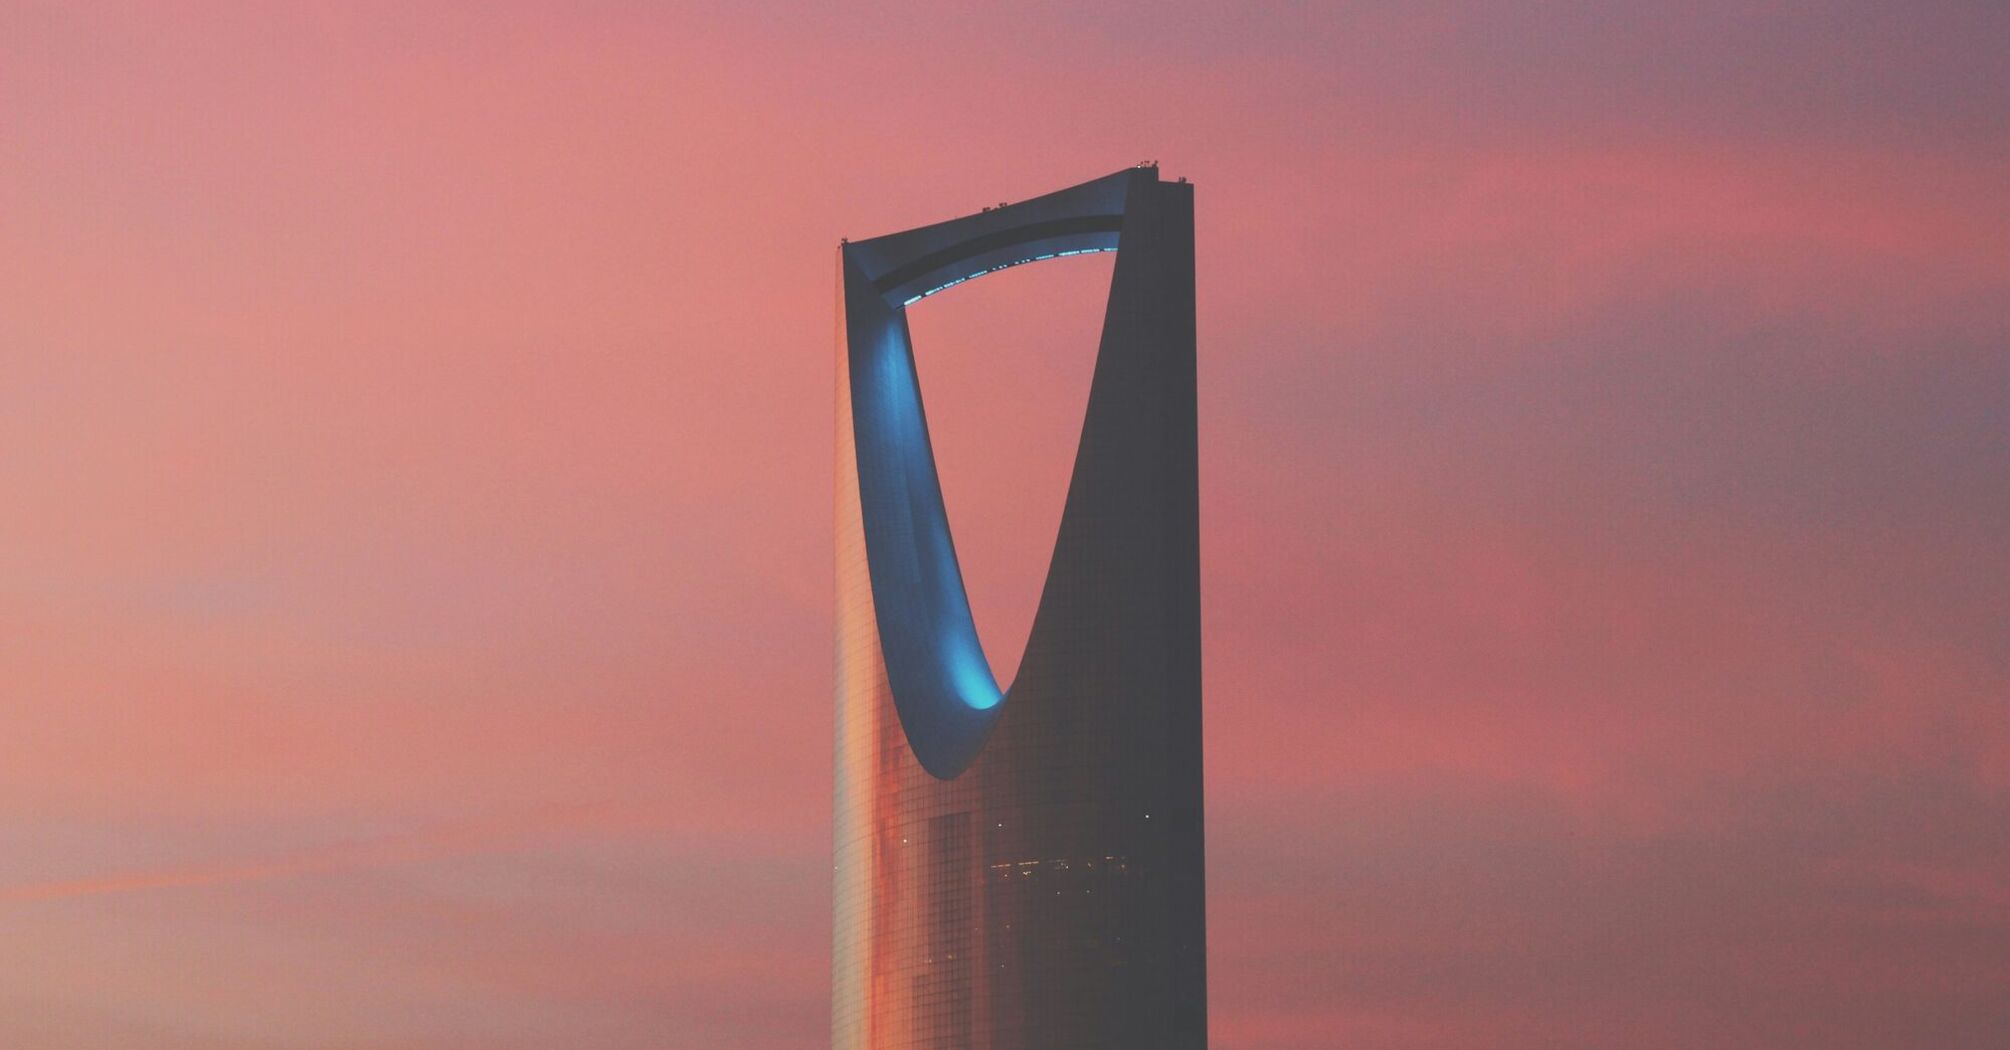 Sunset at Riyadh, Saudi Arabia